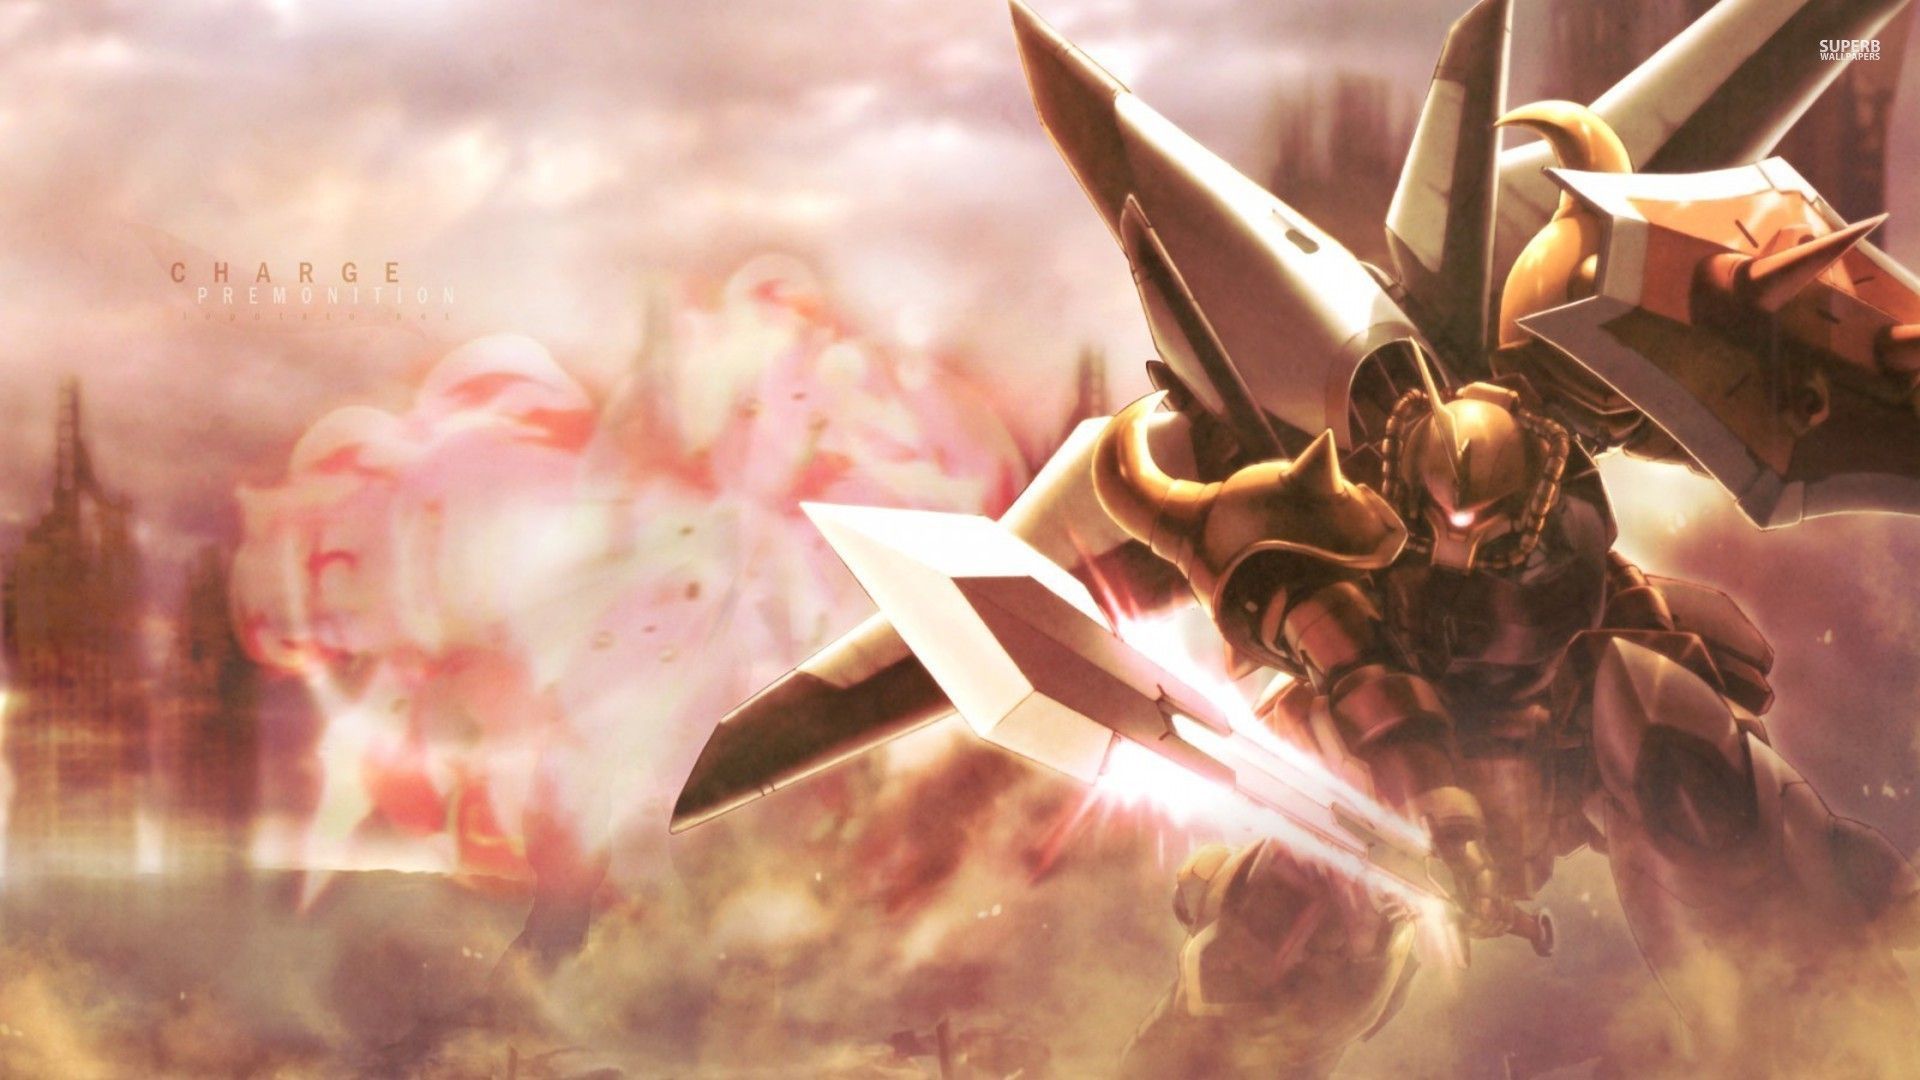 MS-06 Zaku II - Gundam wallpaper - Anime wallpapers - #29900